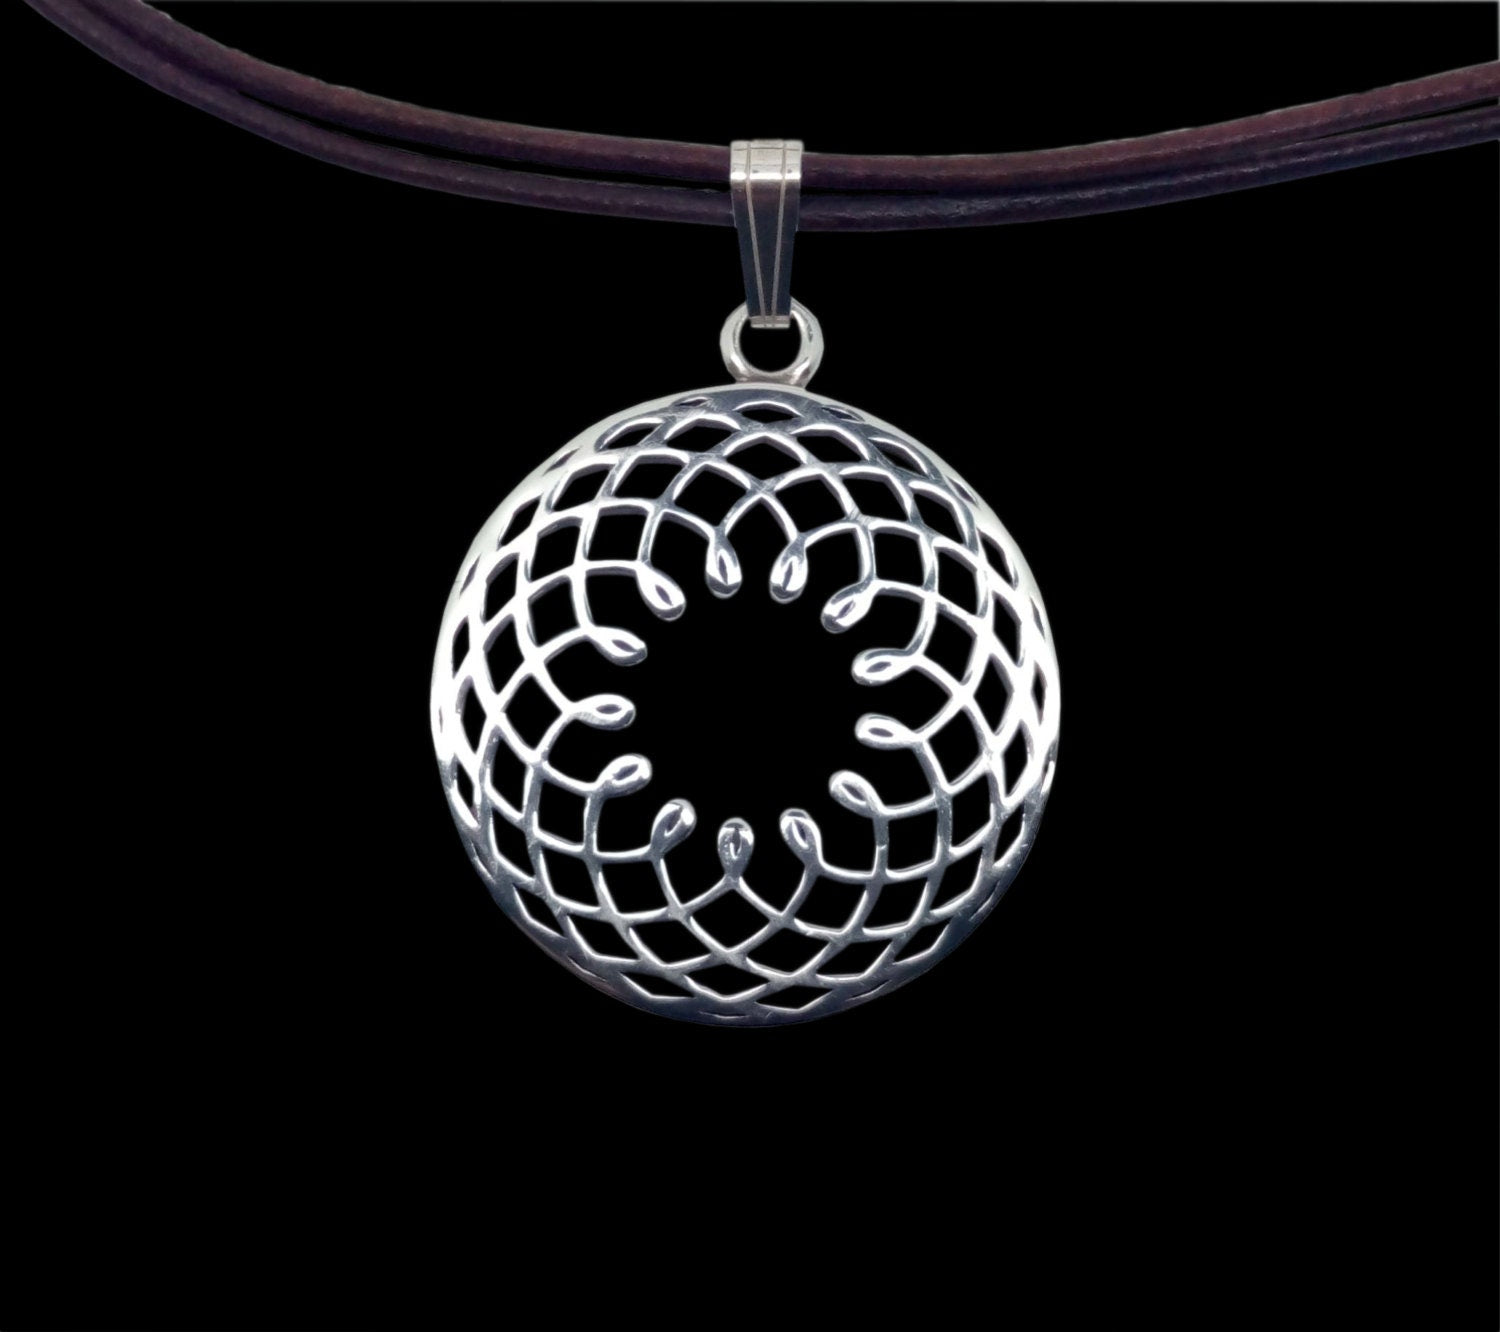 925 Sterling Silver Pendant inspired in Spirographic Art